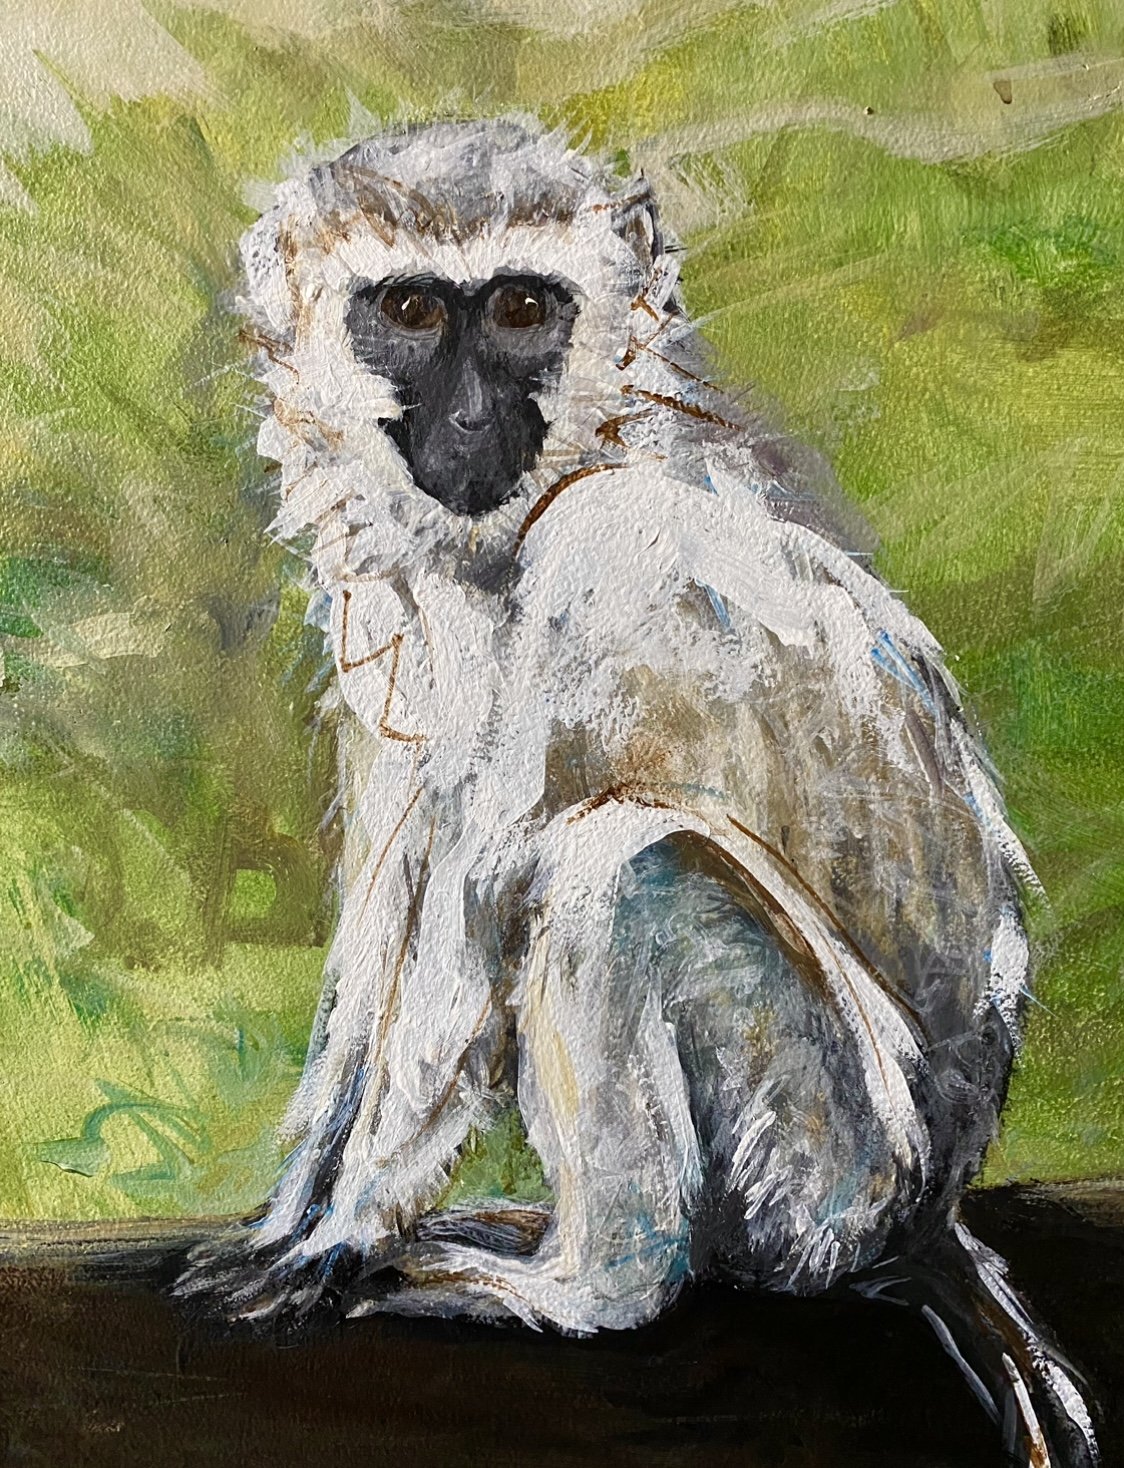  Cheeky Vervet monkey